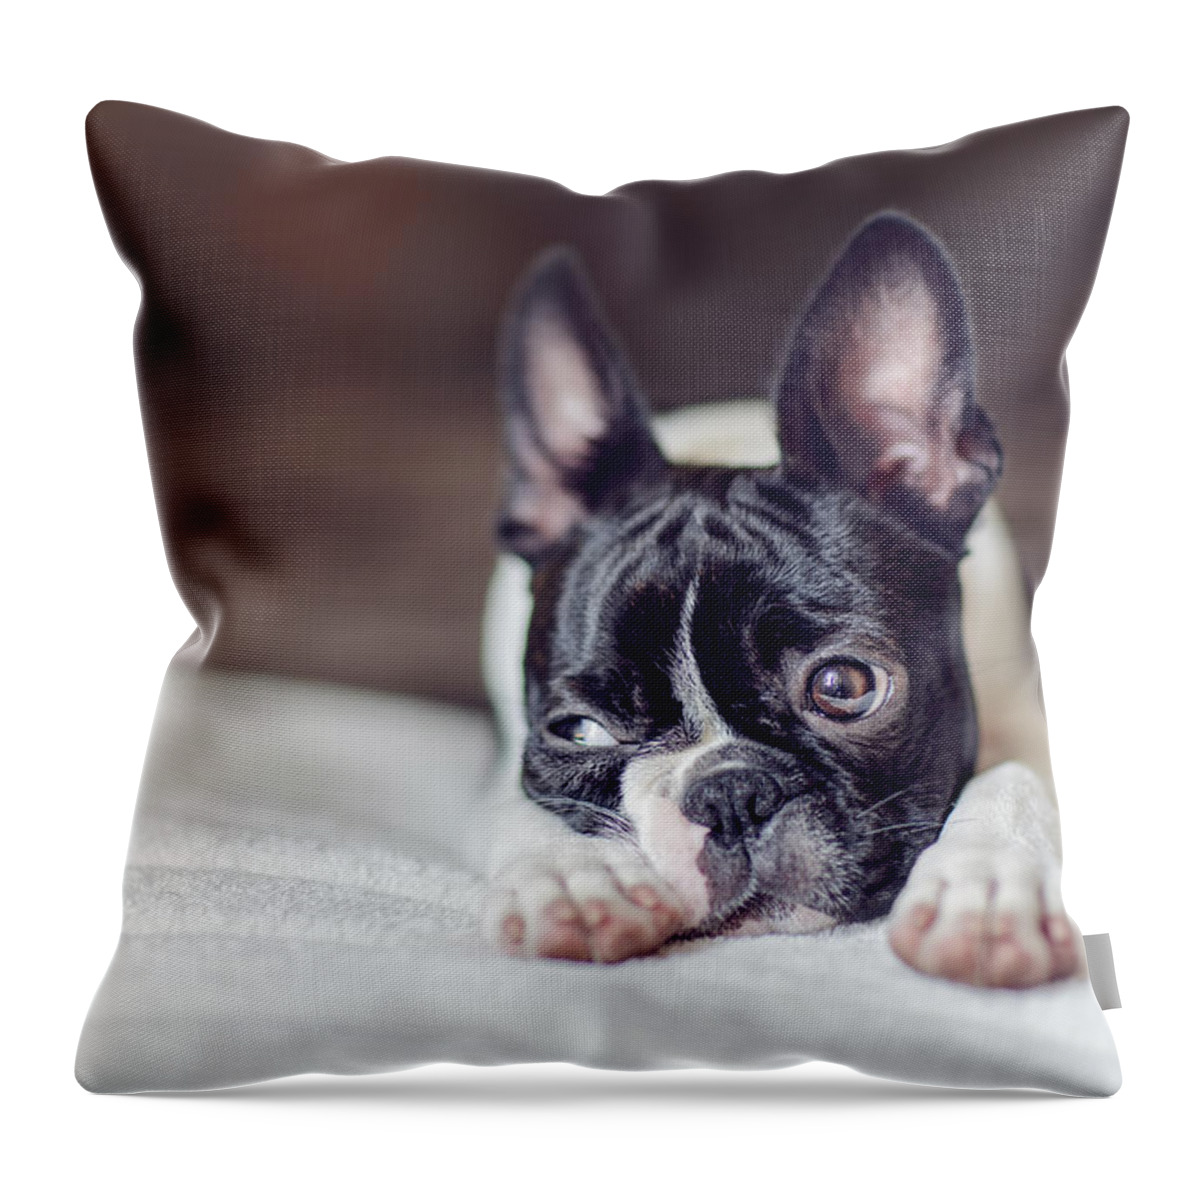 Cute Throw Pillow featuring the photograph Boston Terrier Puppy #3 by Nailia Schwarz